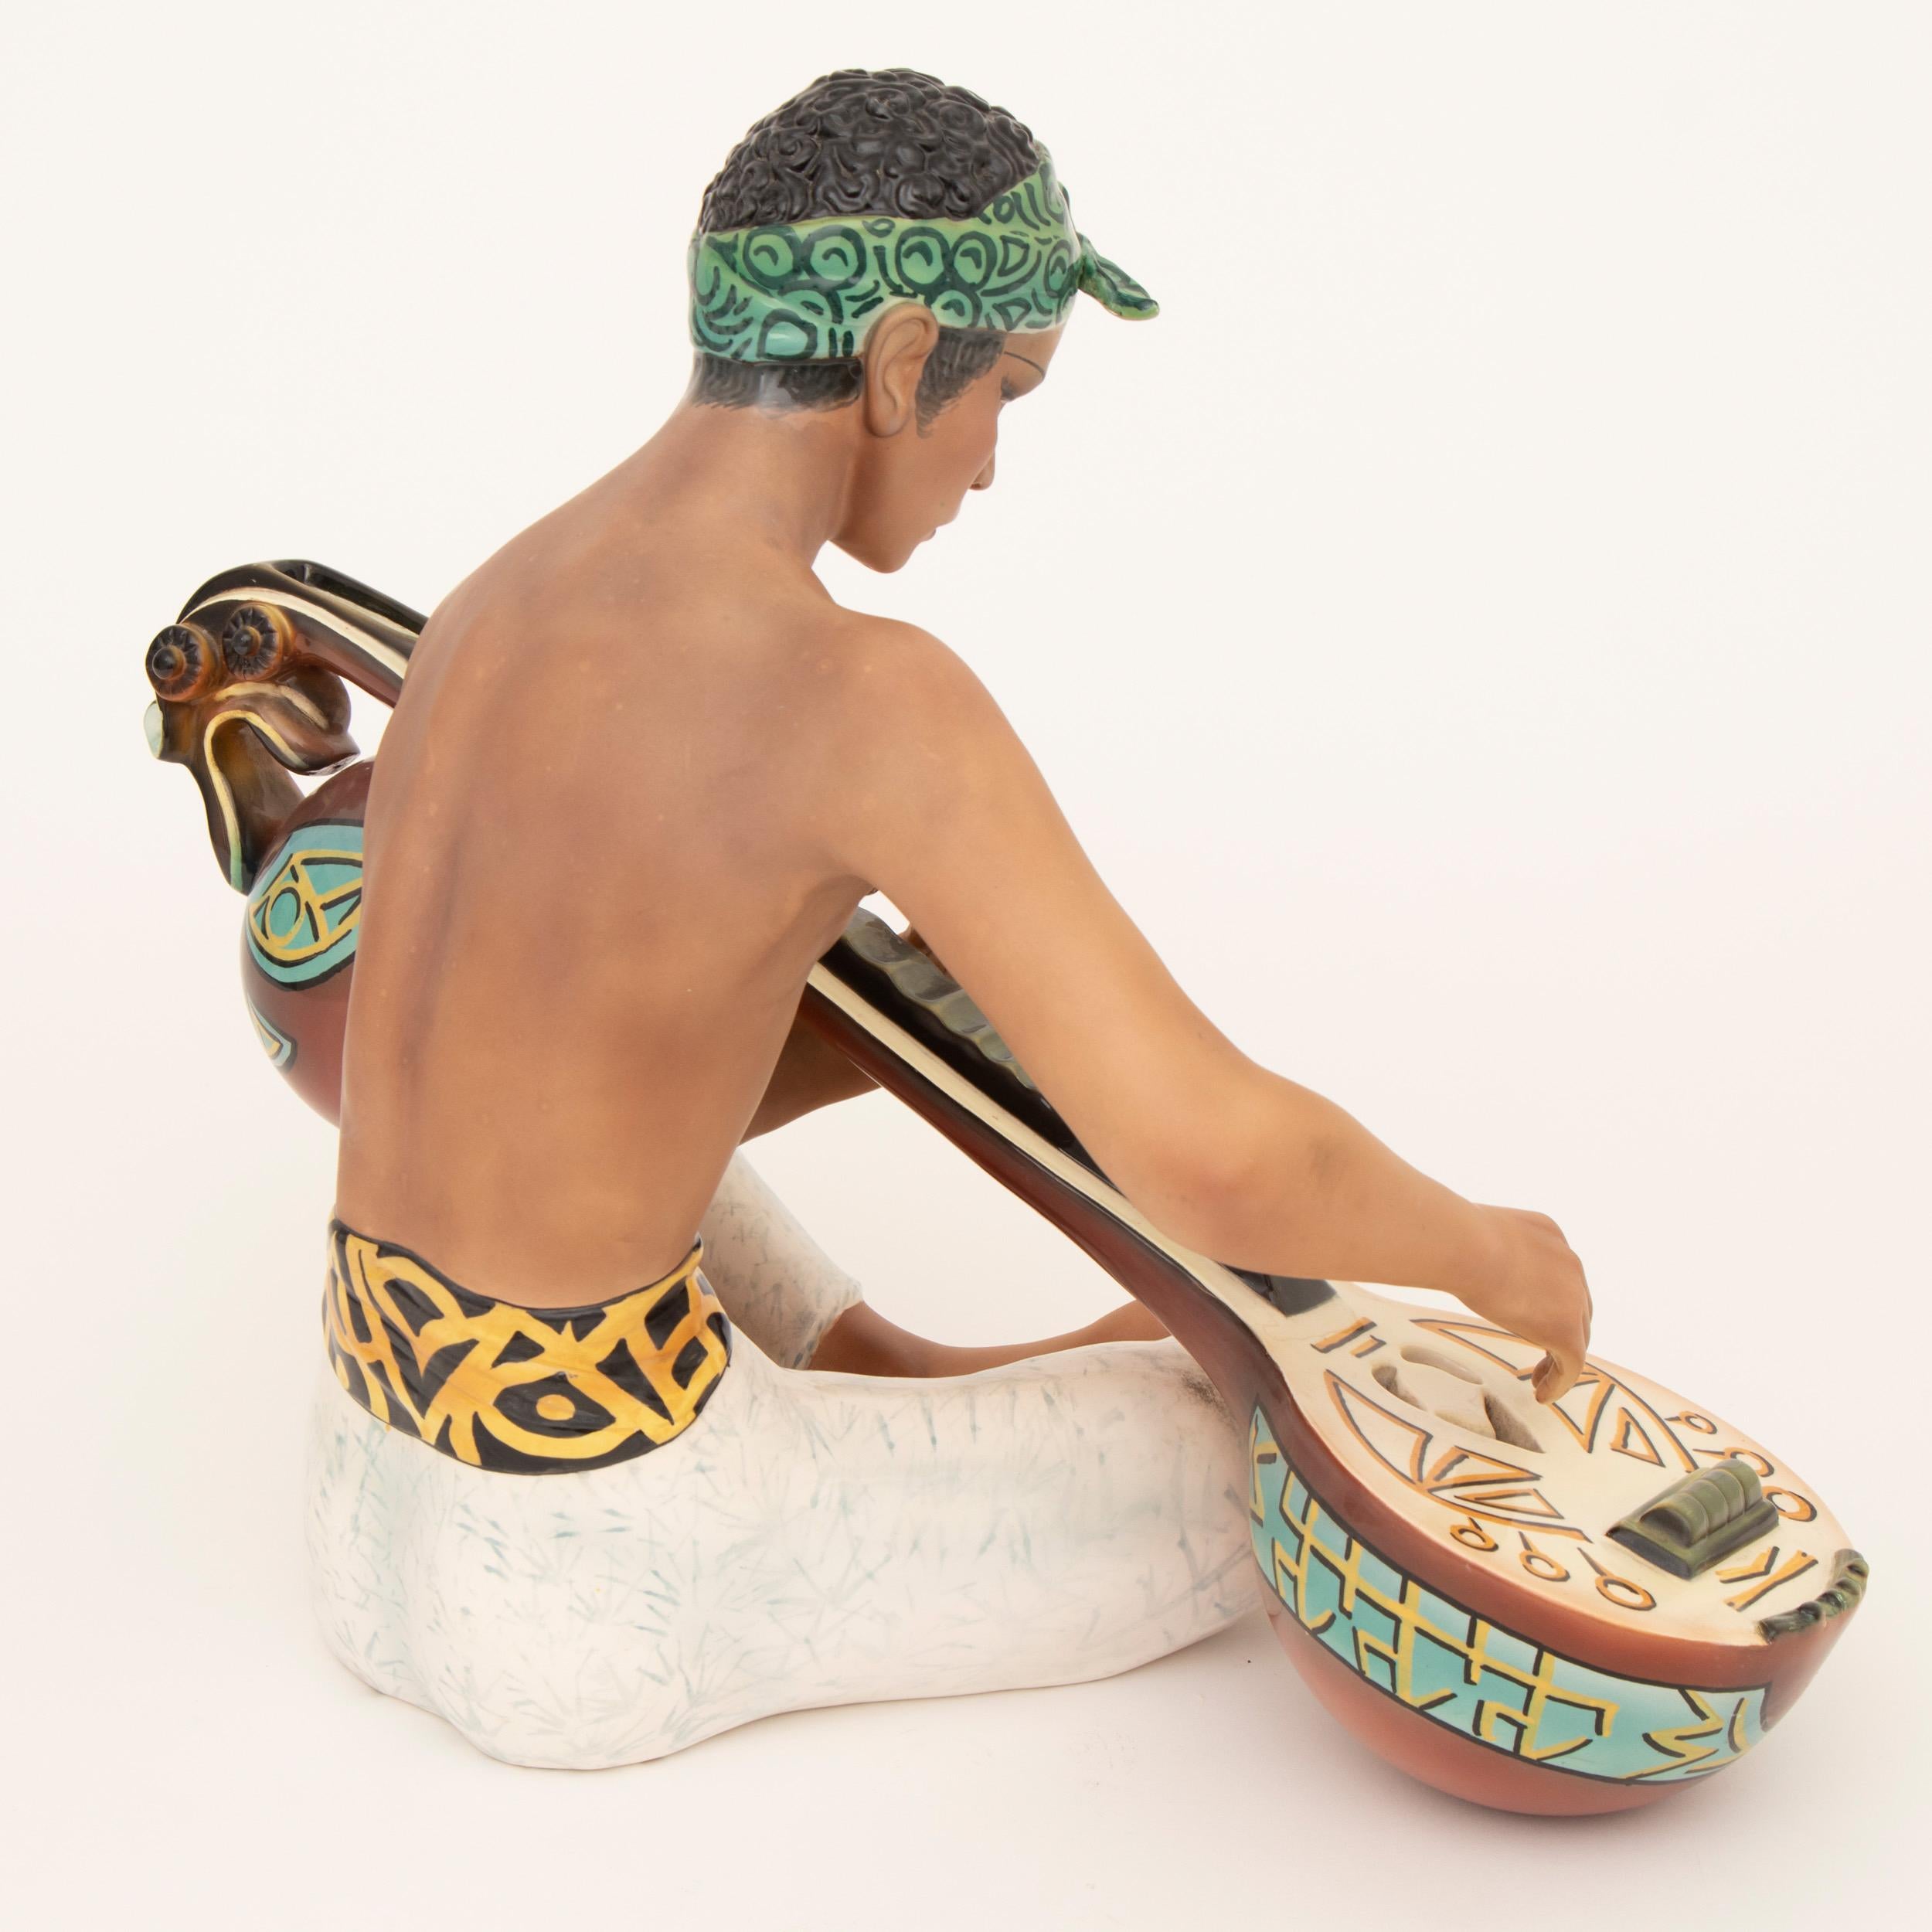 Art Deco Ceramic Indonesian Figure Sculpture 'Bantang', by Clelia Bertetti, circa 1933